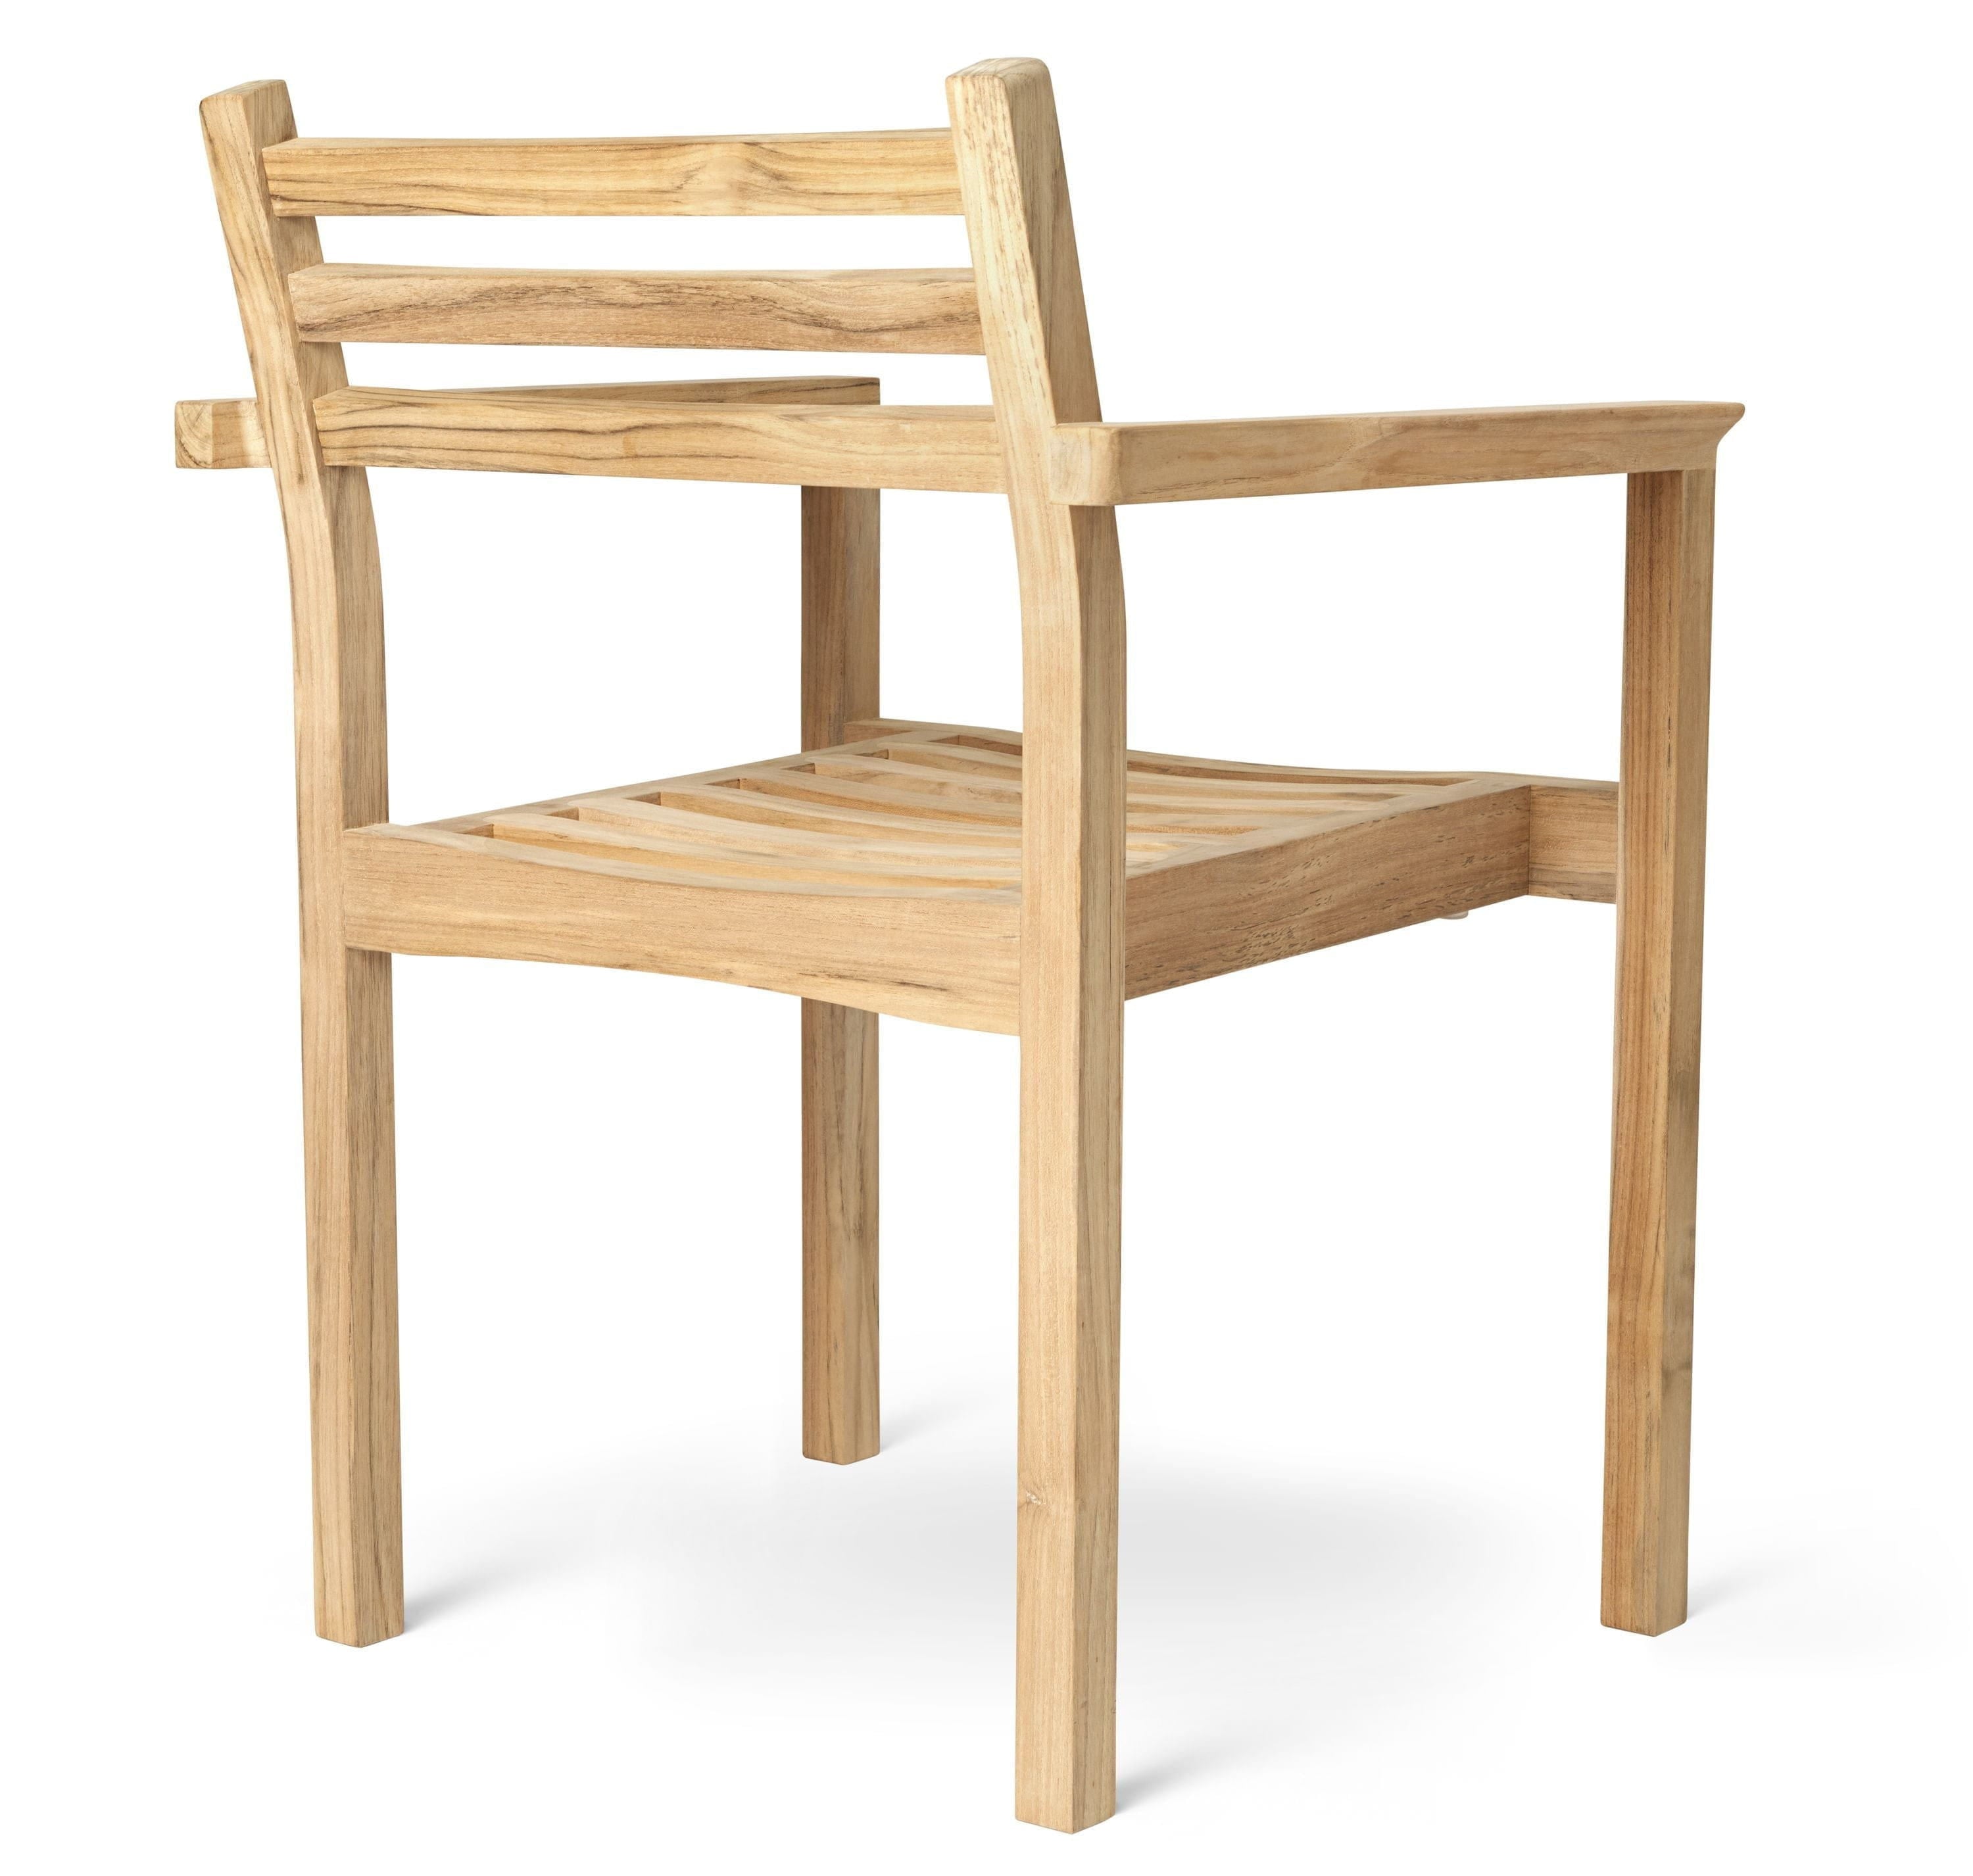 Carl Hansen Ah502 Outdoor Dining Chair With Armrest